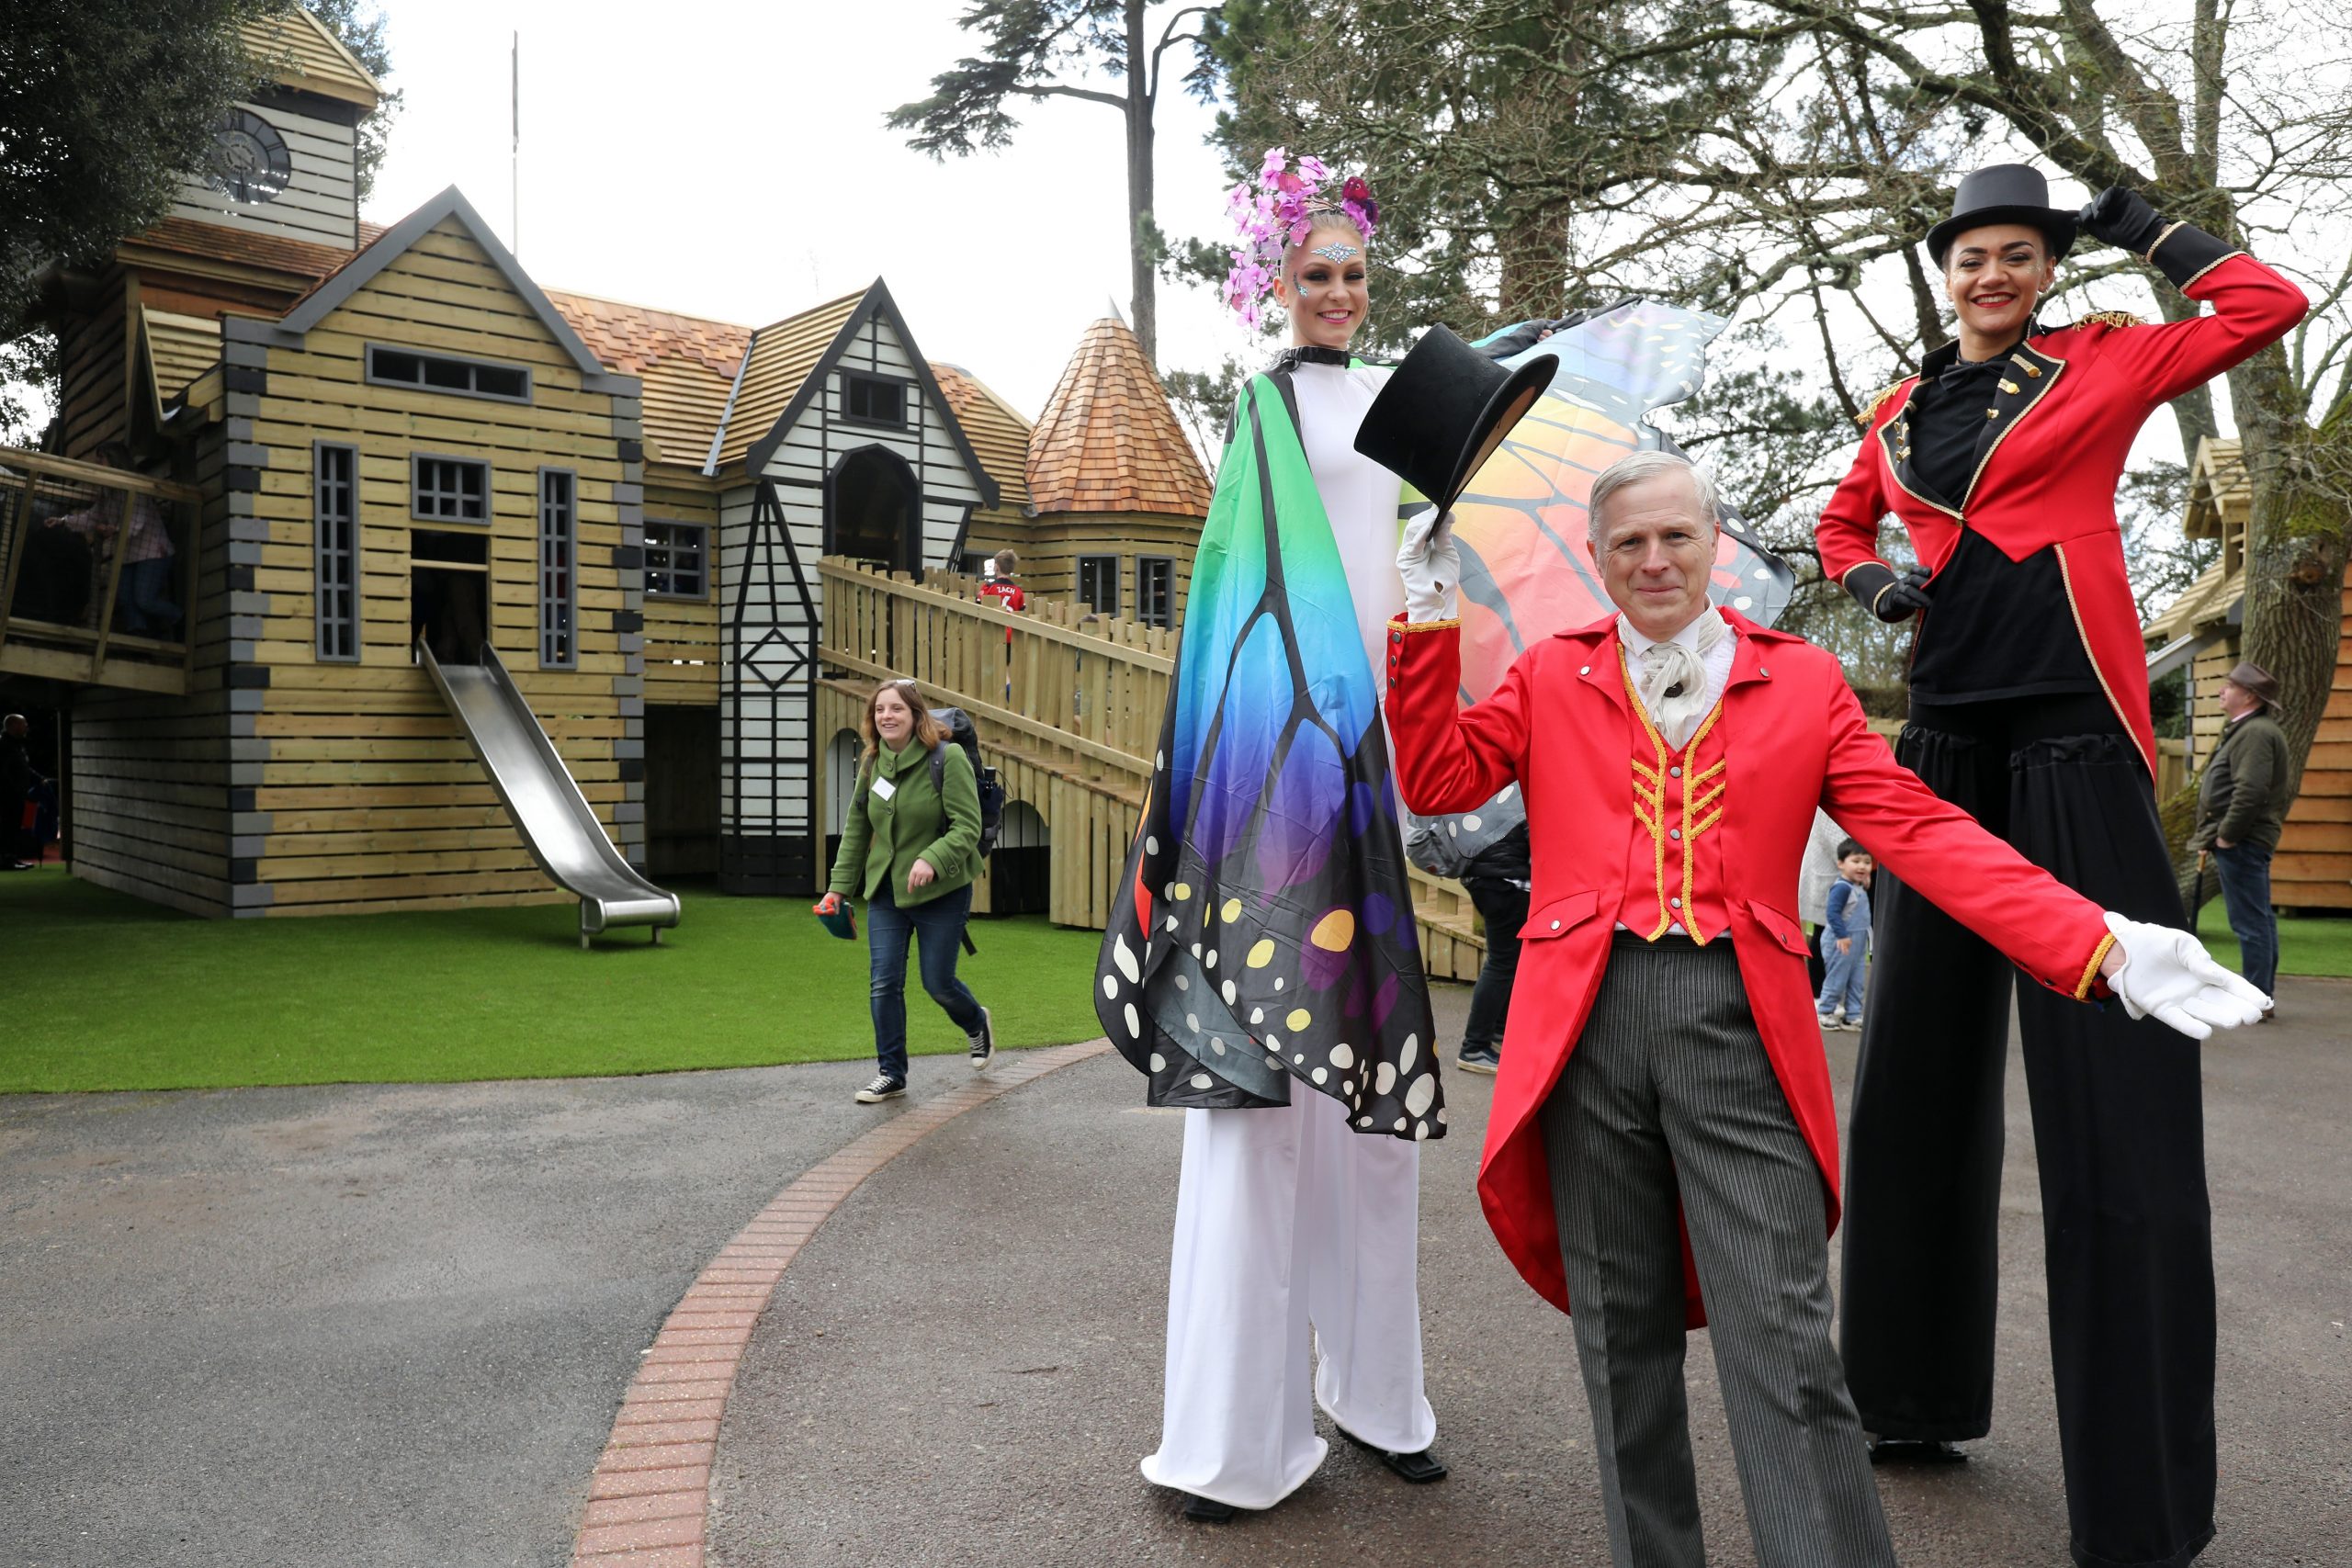 Lord Montagu and stilt walkers at Little Beaulieu launch